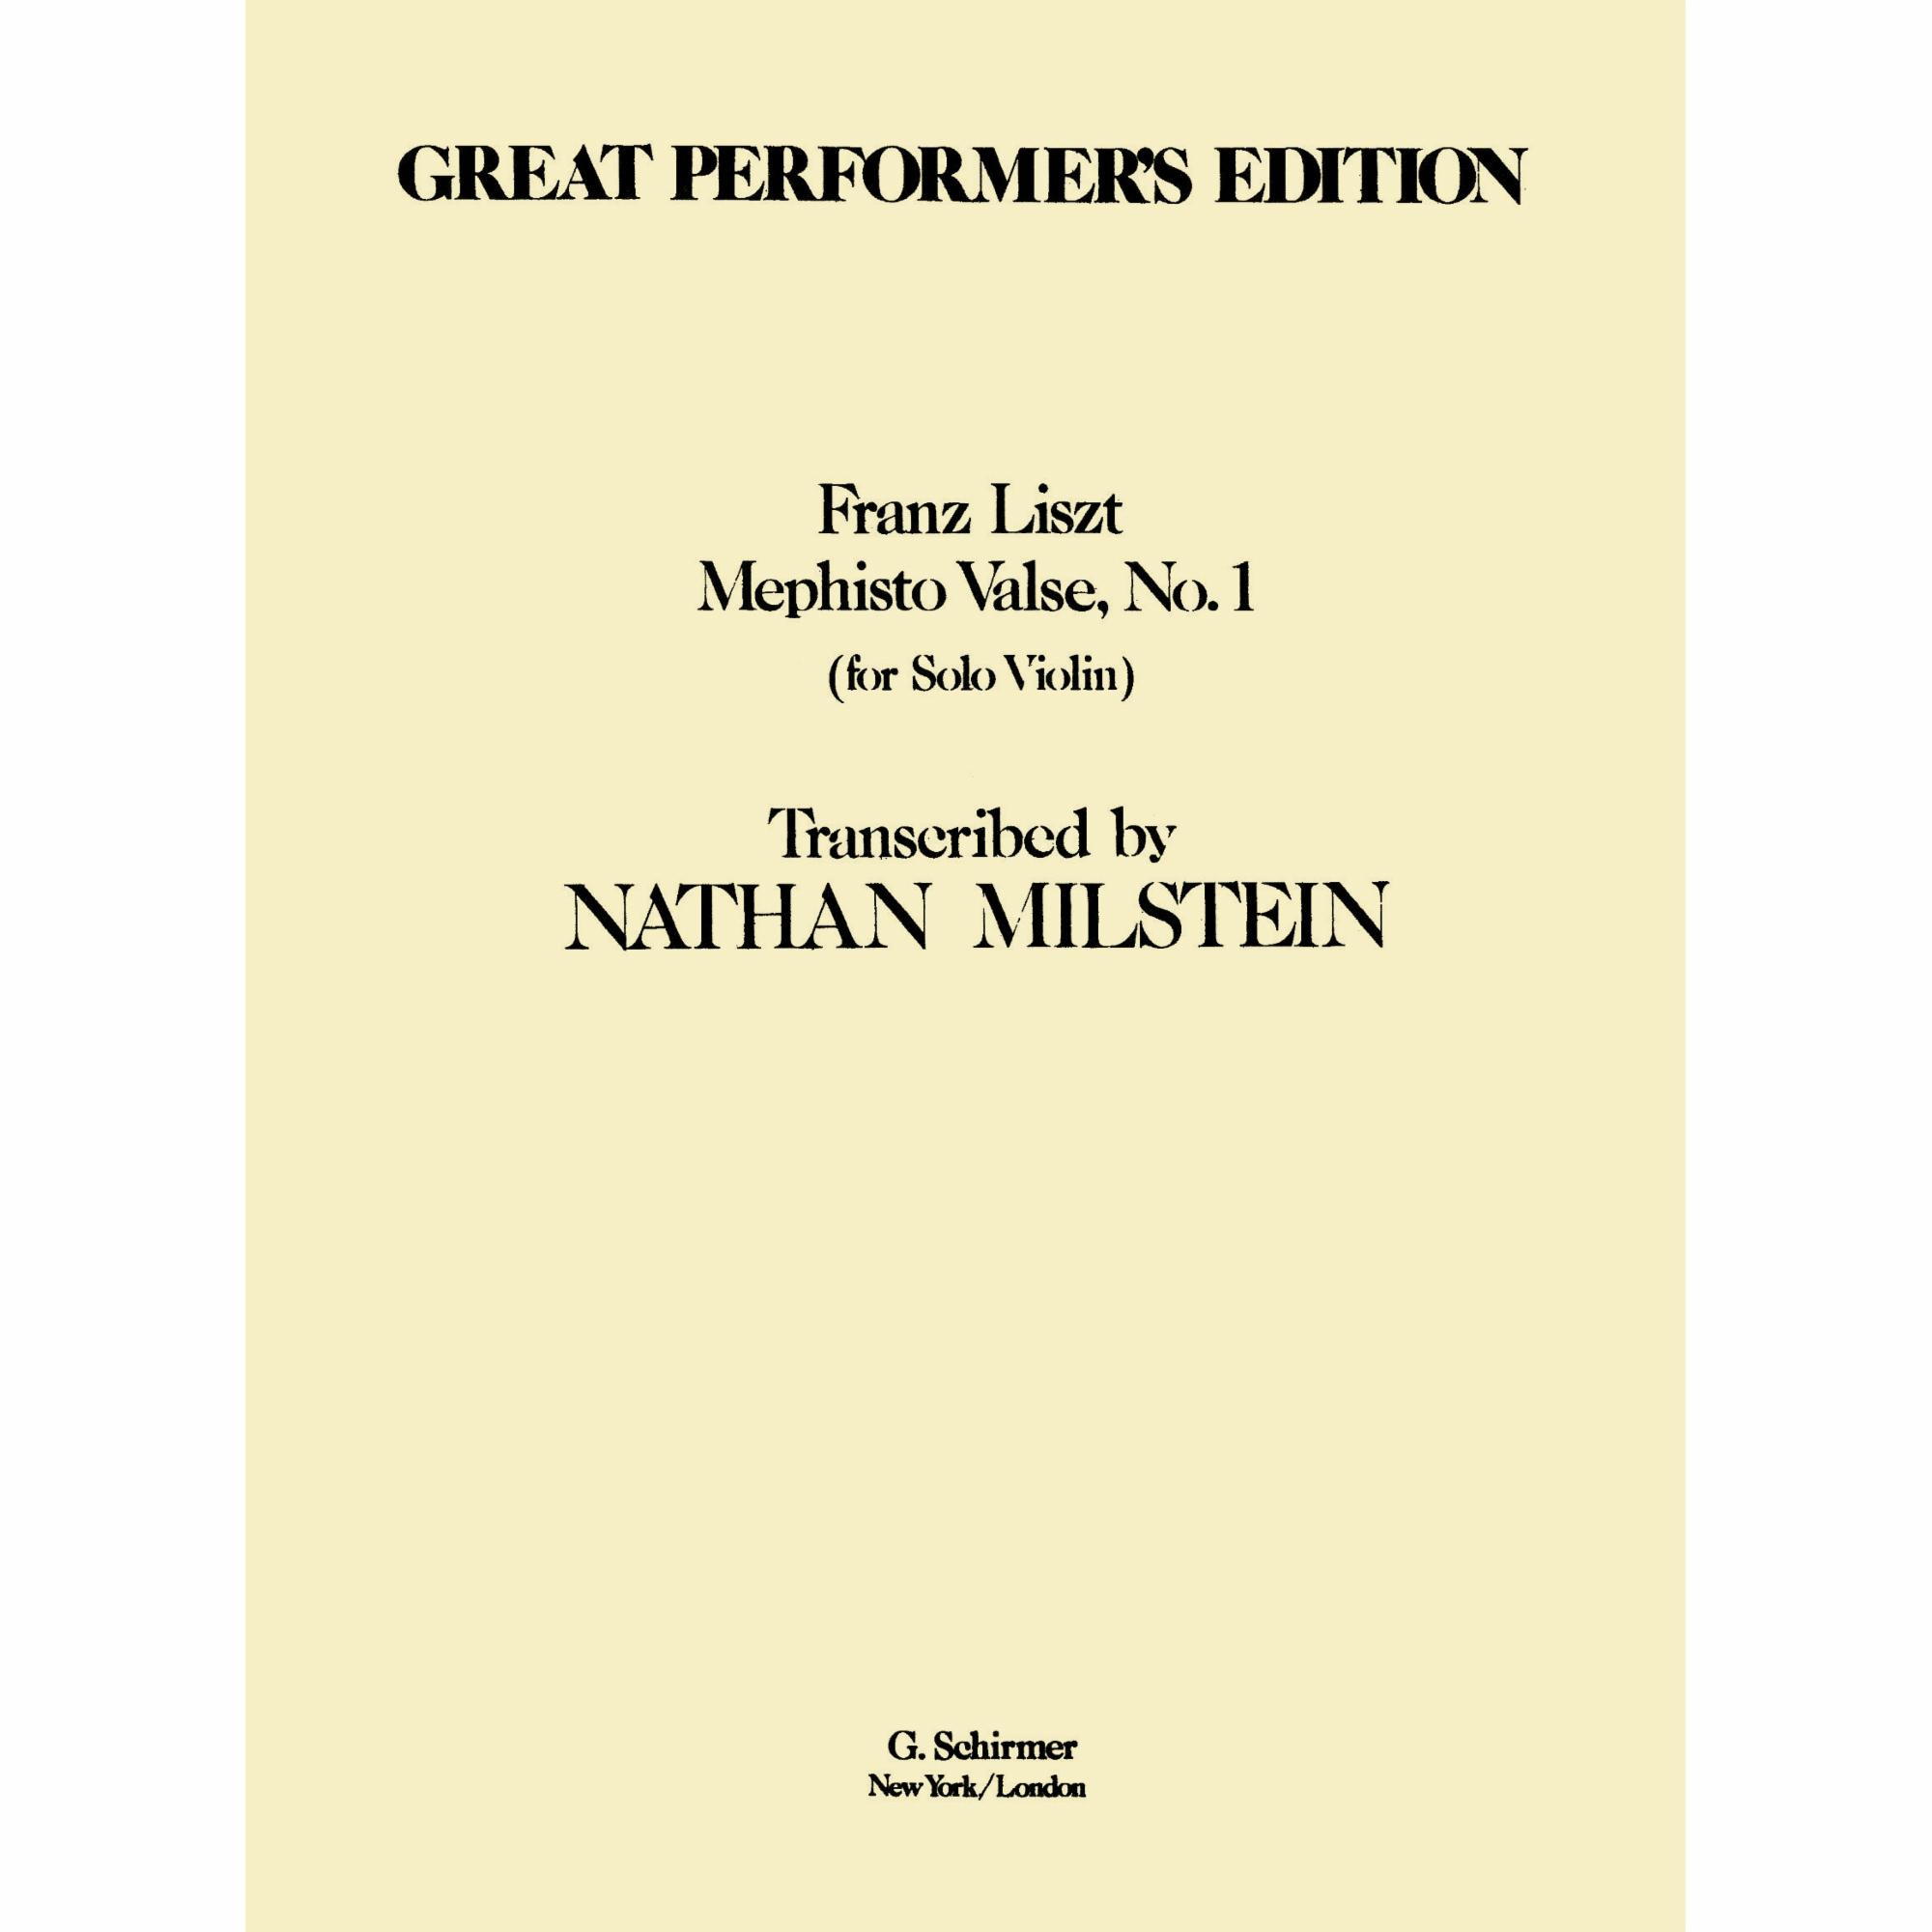 Liszt/Milstein -- Mephisto Valse No. 1 for Solo Violin